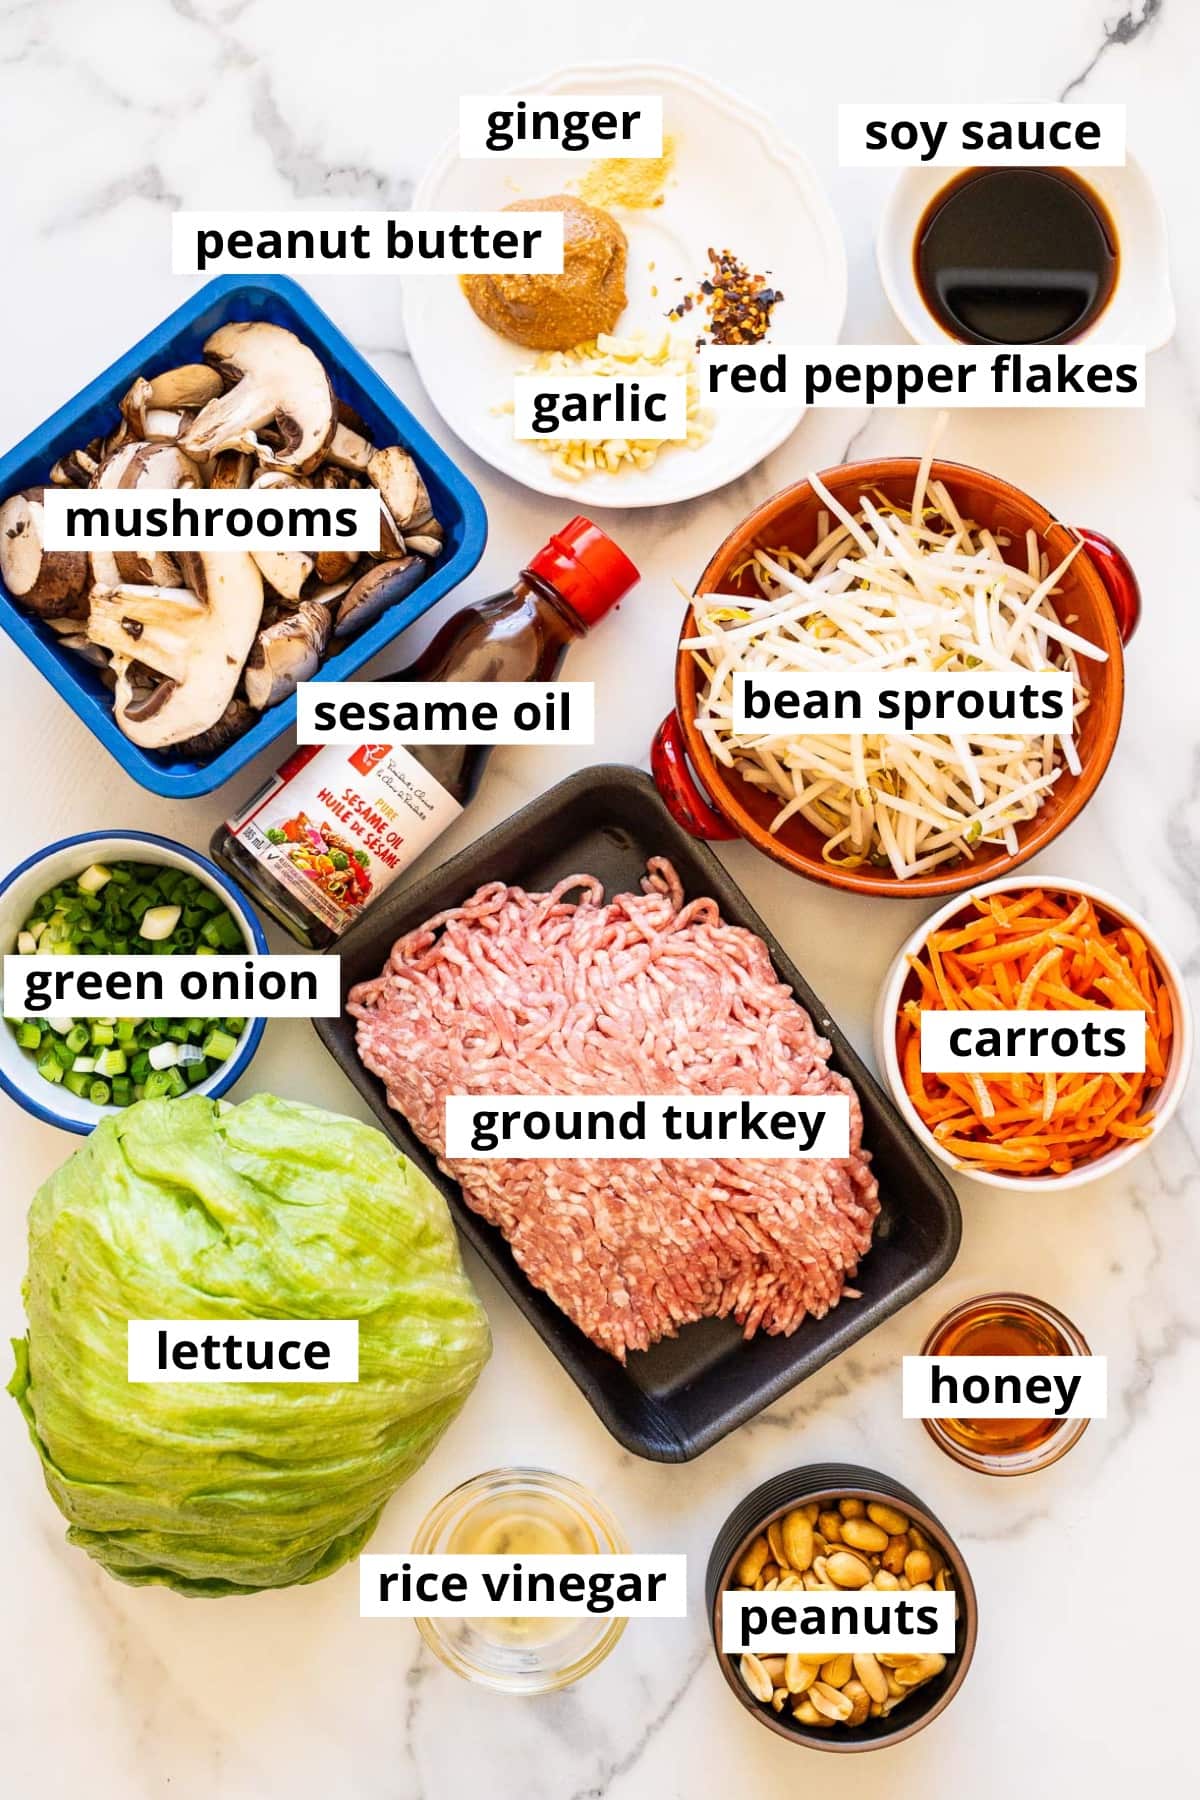 Ground turkey, iceberg lettuce, carrots, green onion, bean sprouts, honey, peanuts, rice vinegar, sesame oil, mushrooms, soy sauce, red pepper flakes, garlic, peanut butter, ginger.